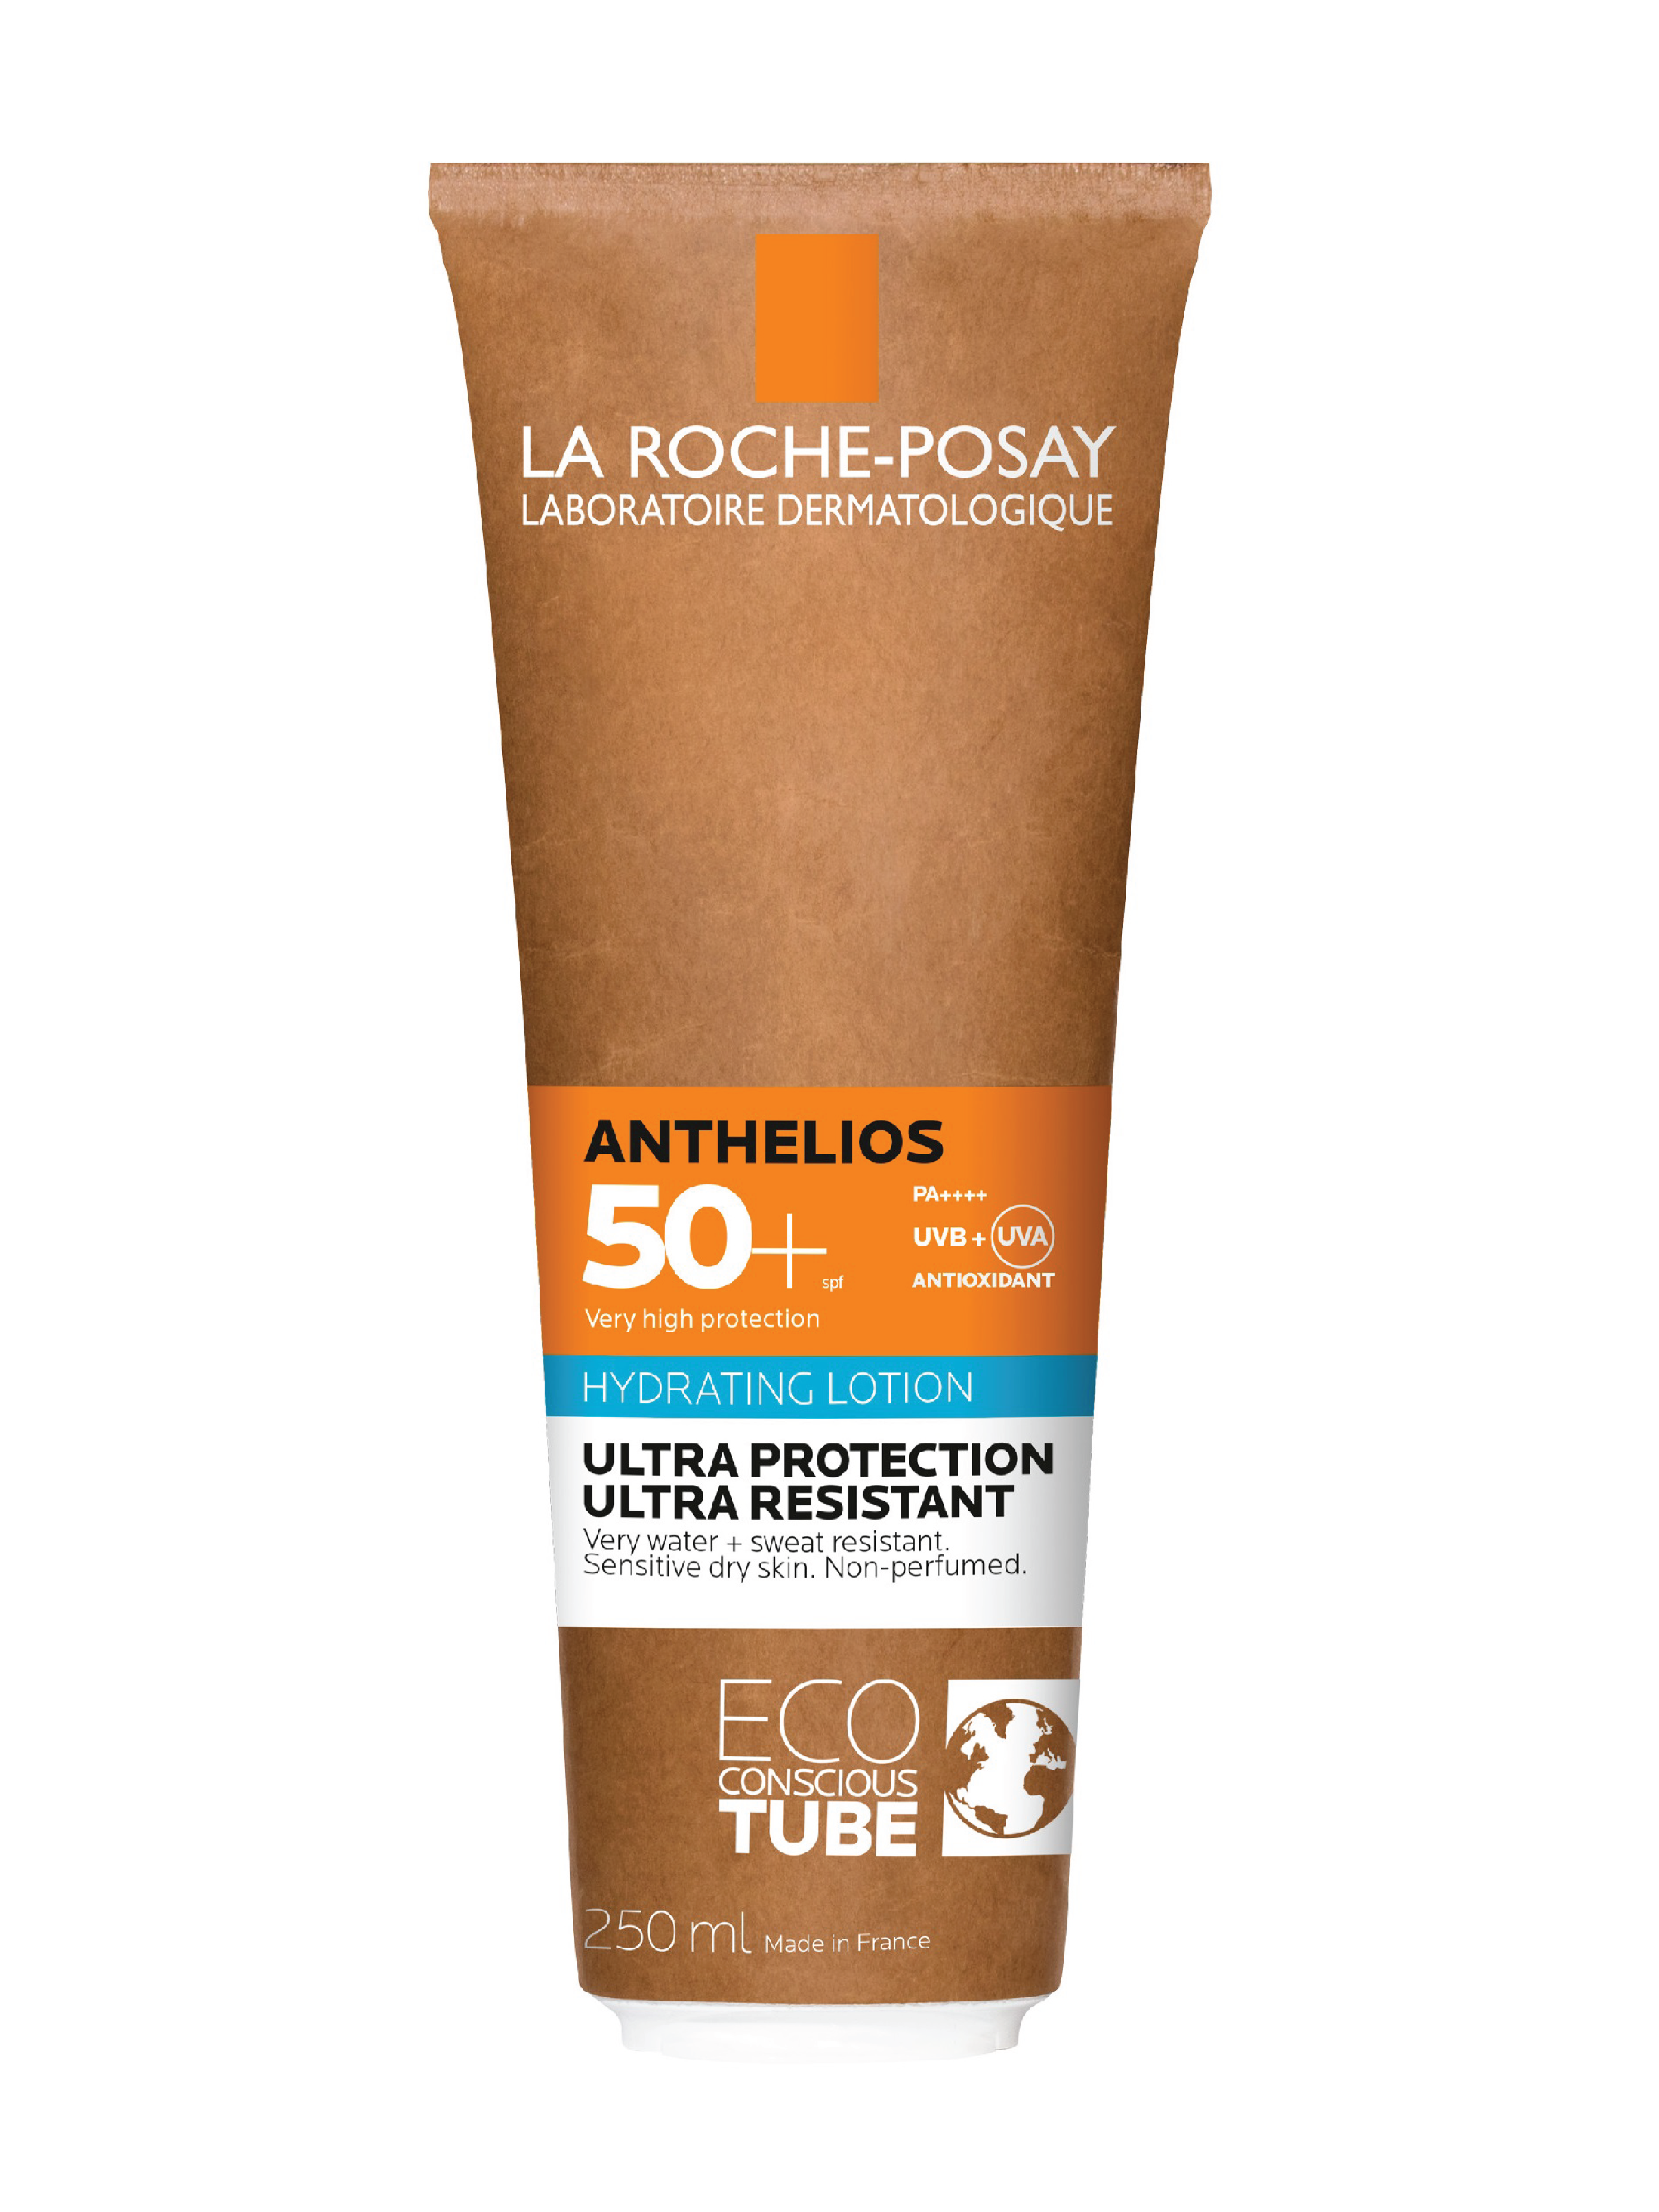 La Roche-Posay Anthelios Lotion, SPF 50+, 250 ml